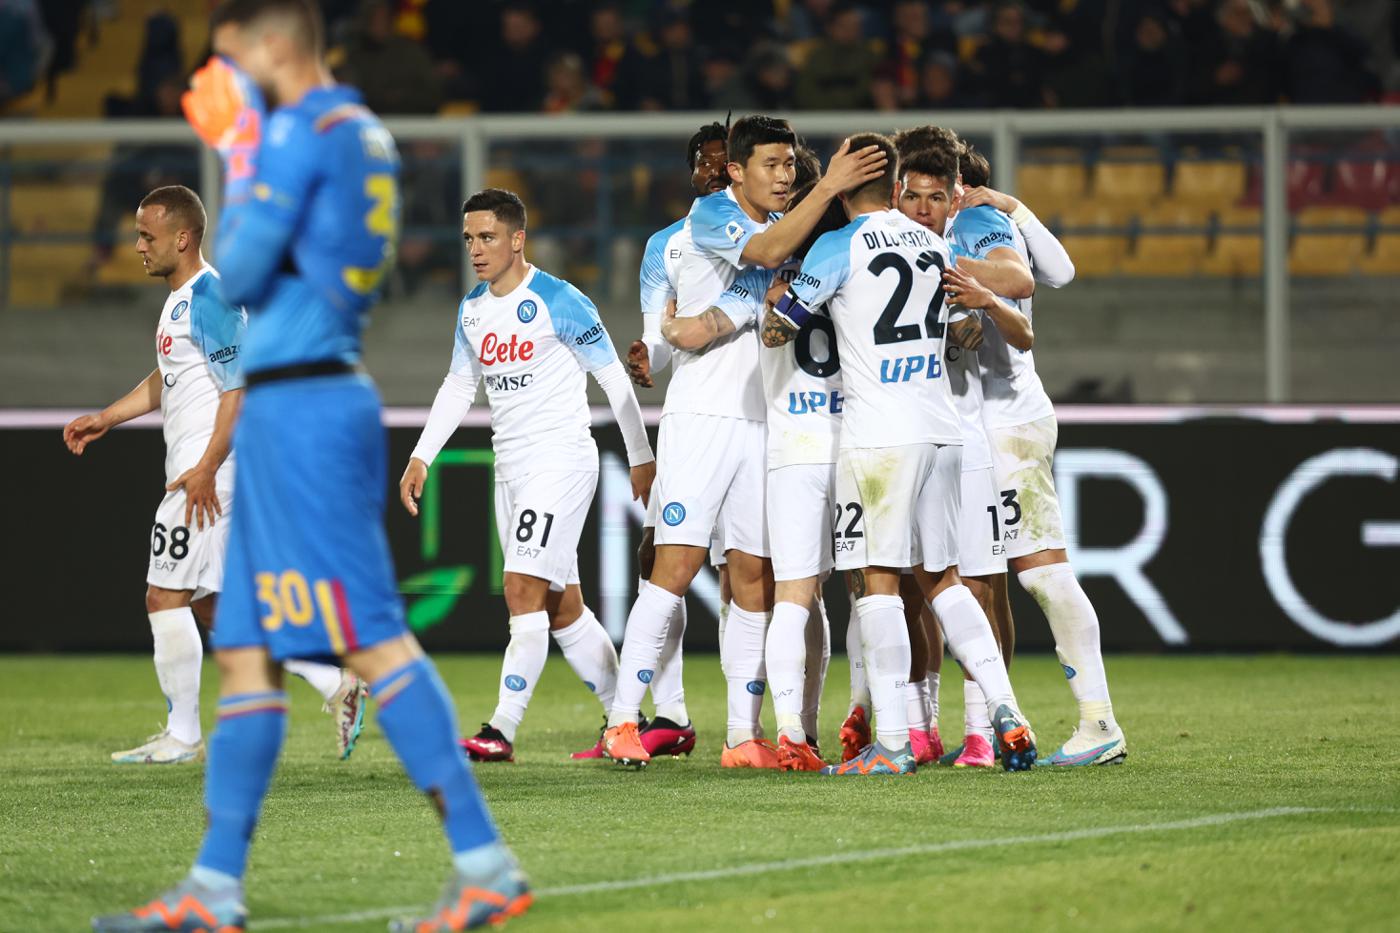 Lecce vs Napoli: where to watch, online broadcast (April 7)